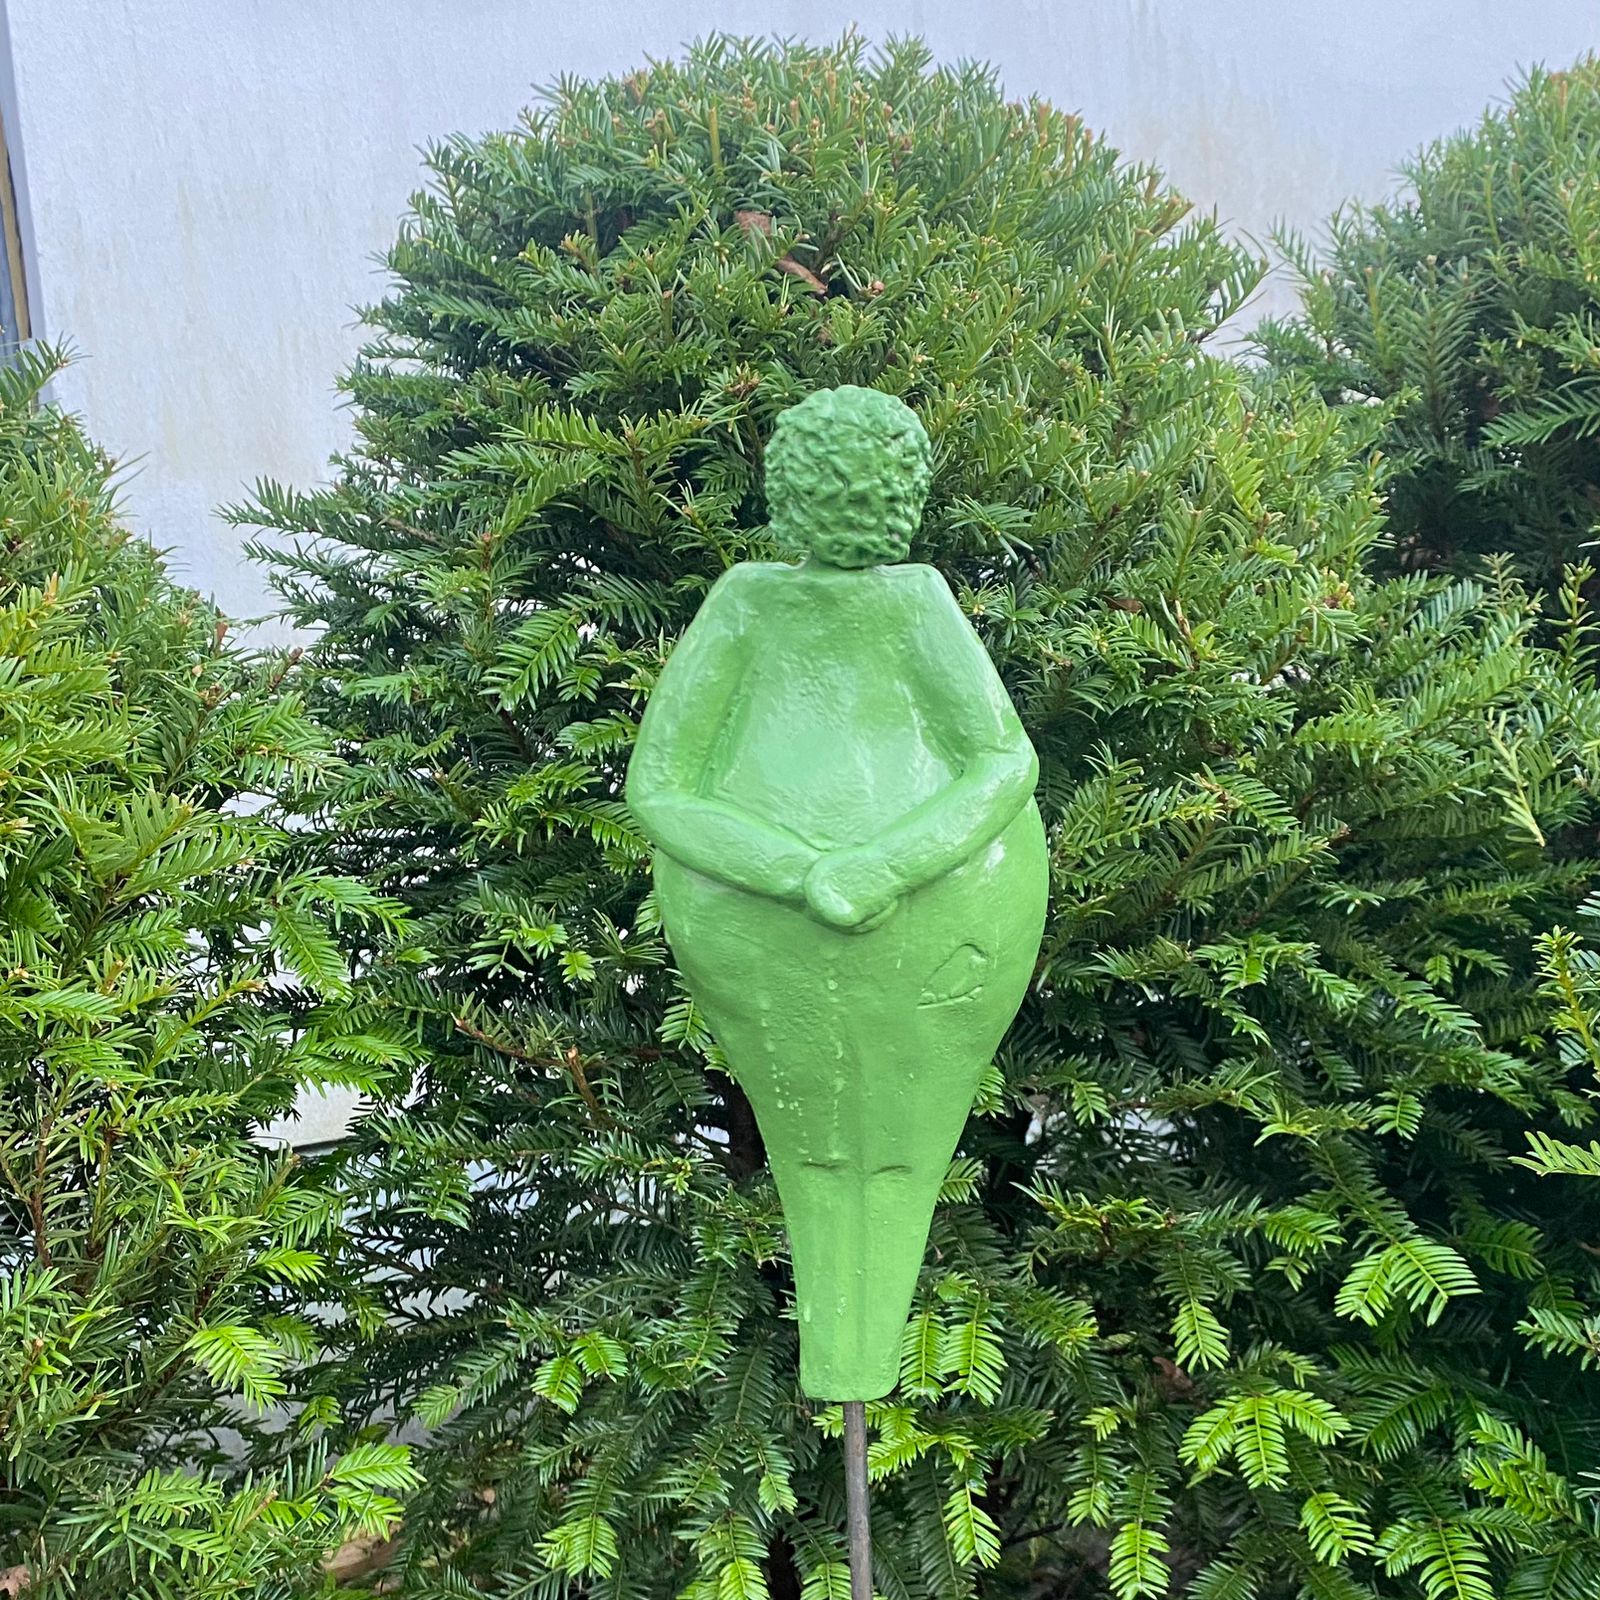 Keramikfigur, Gartenfigur, apfelgrüne Glasur. Serie "Lustige Weiber", Rückenansicht